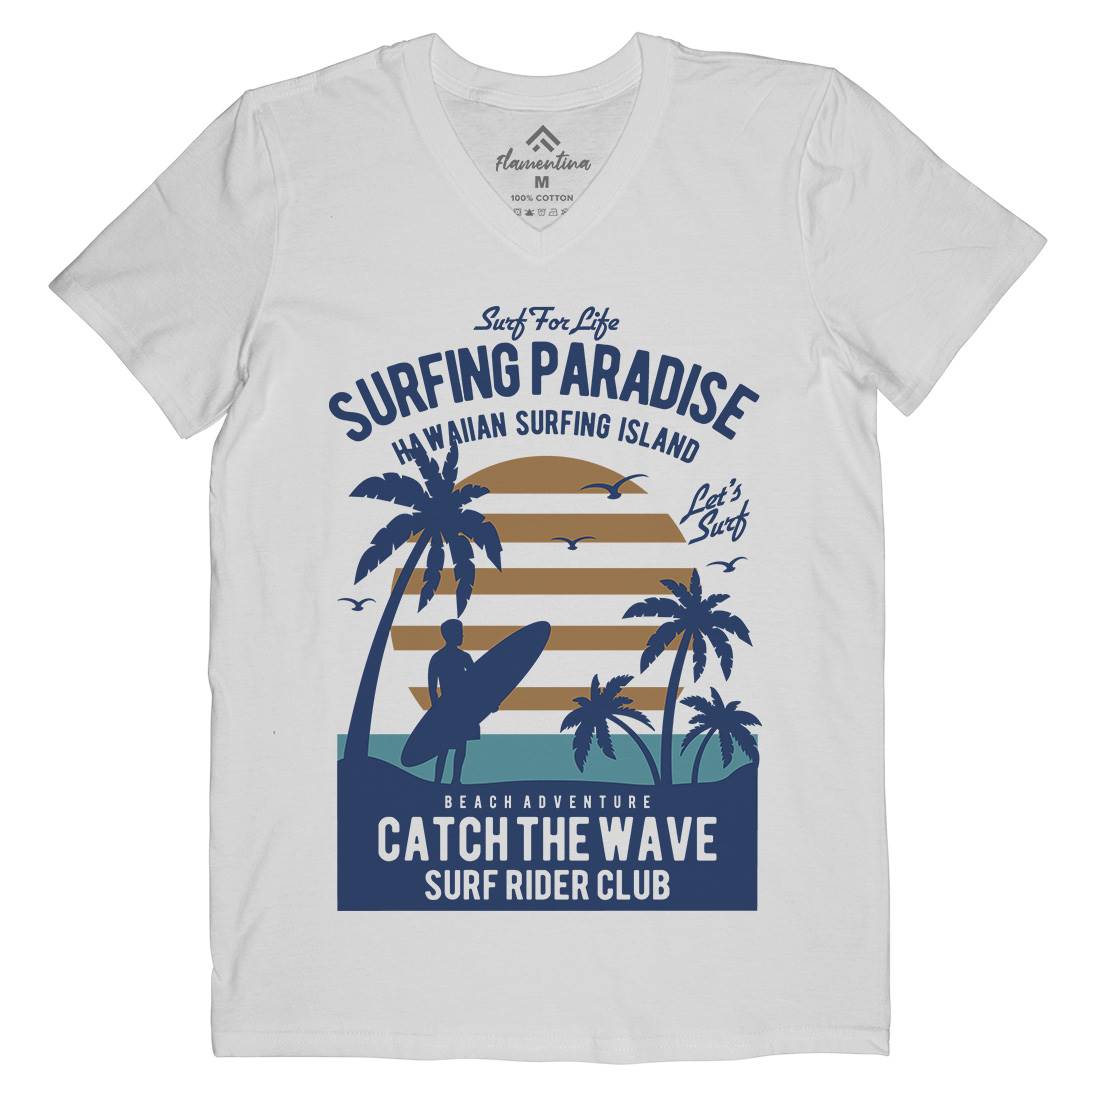 Surfing Paradise Mens V-Neck T-Shirt Surf B463